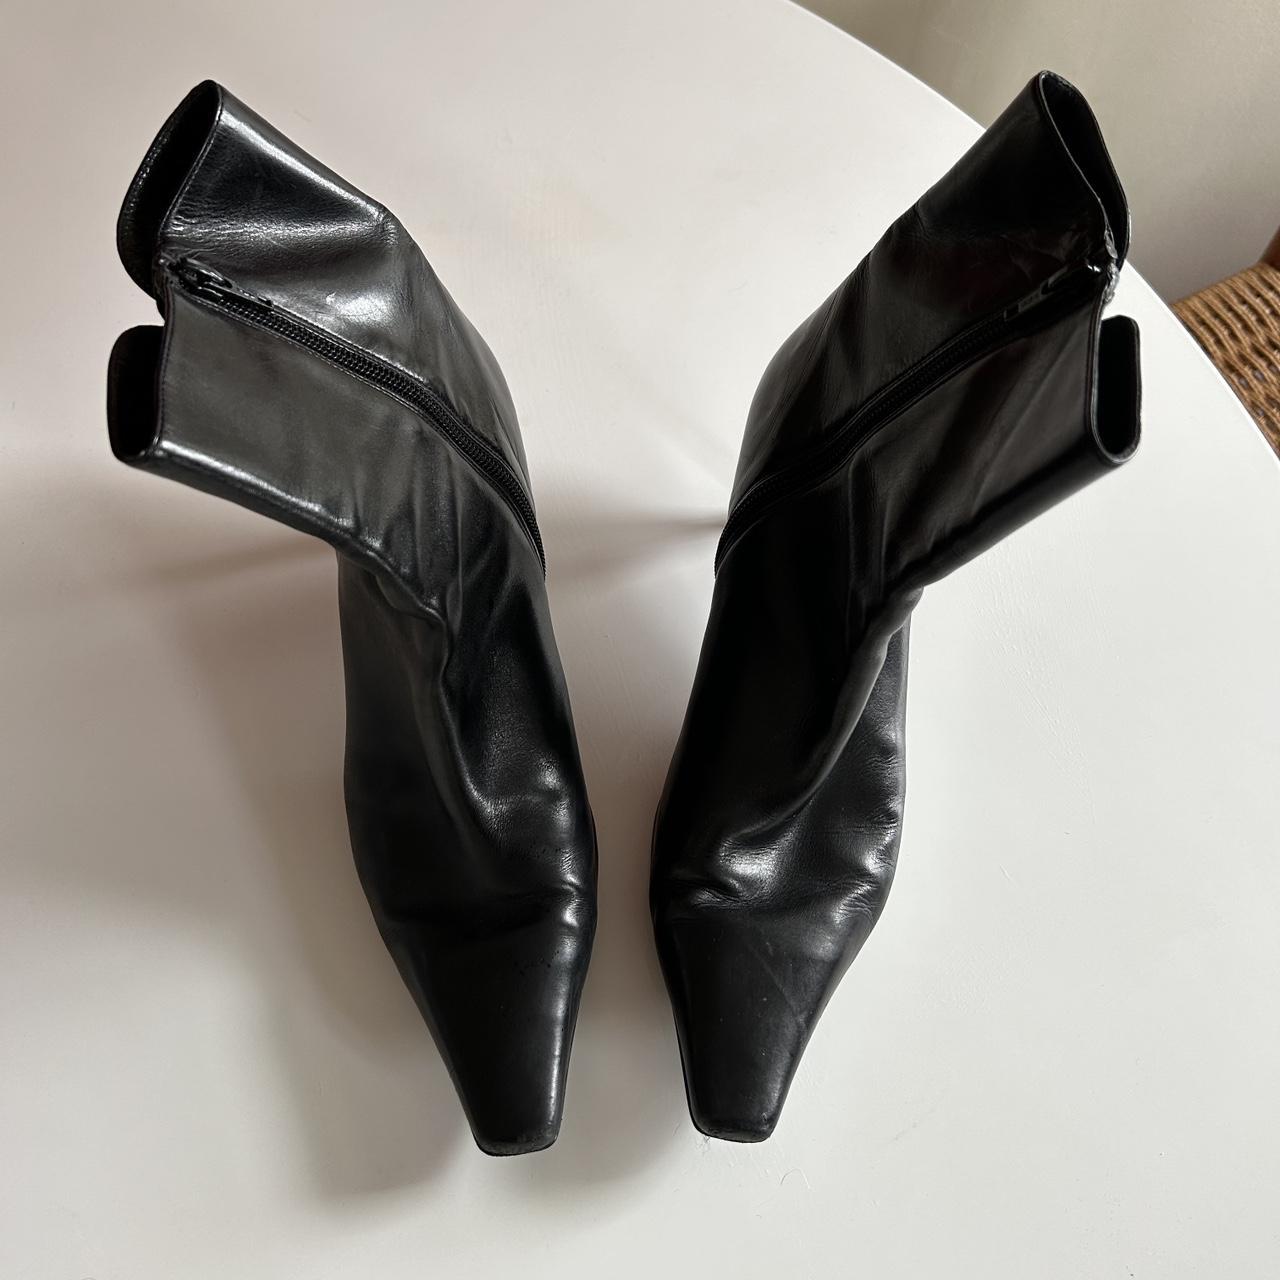 Stuart Weitzman vintage leather ankle boot Pointed... - Depop